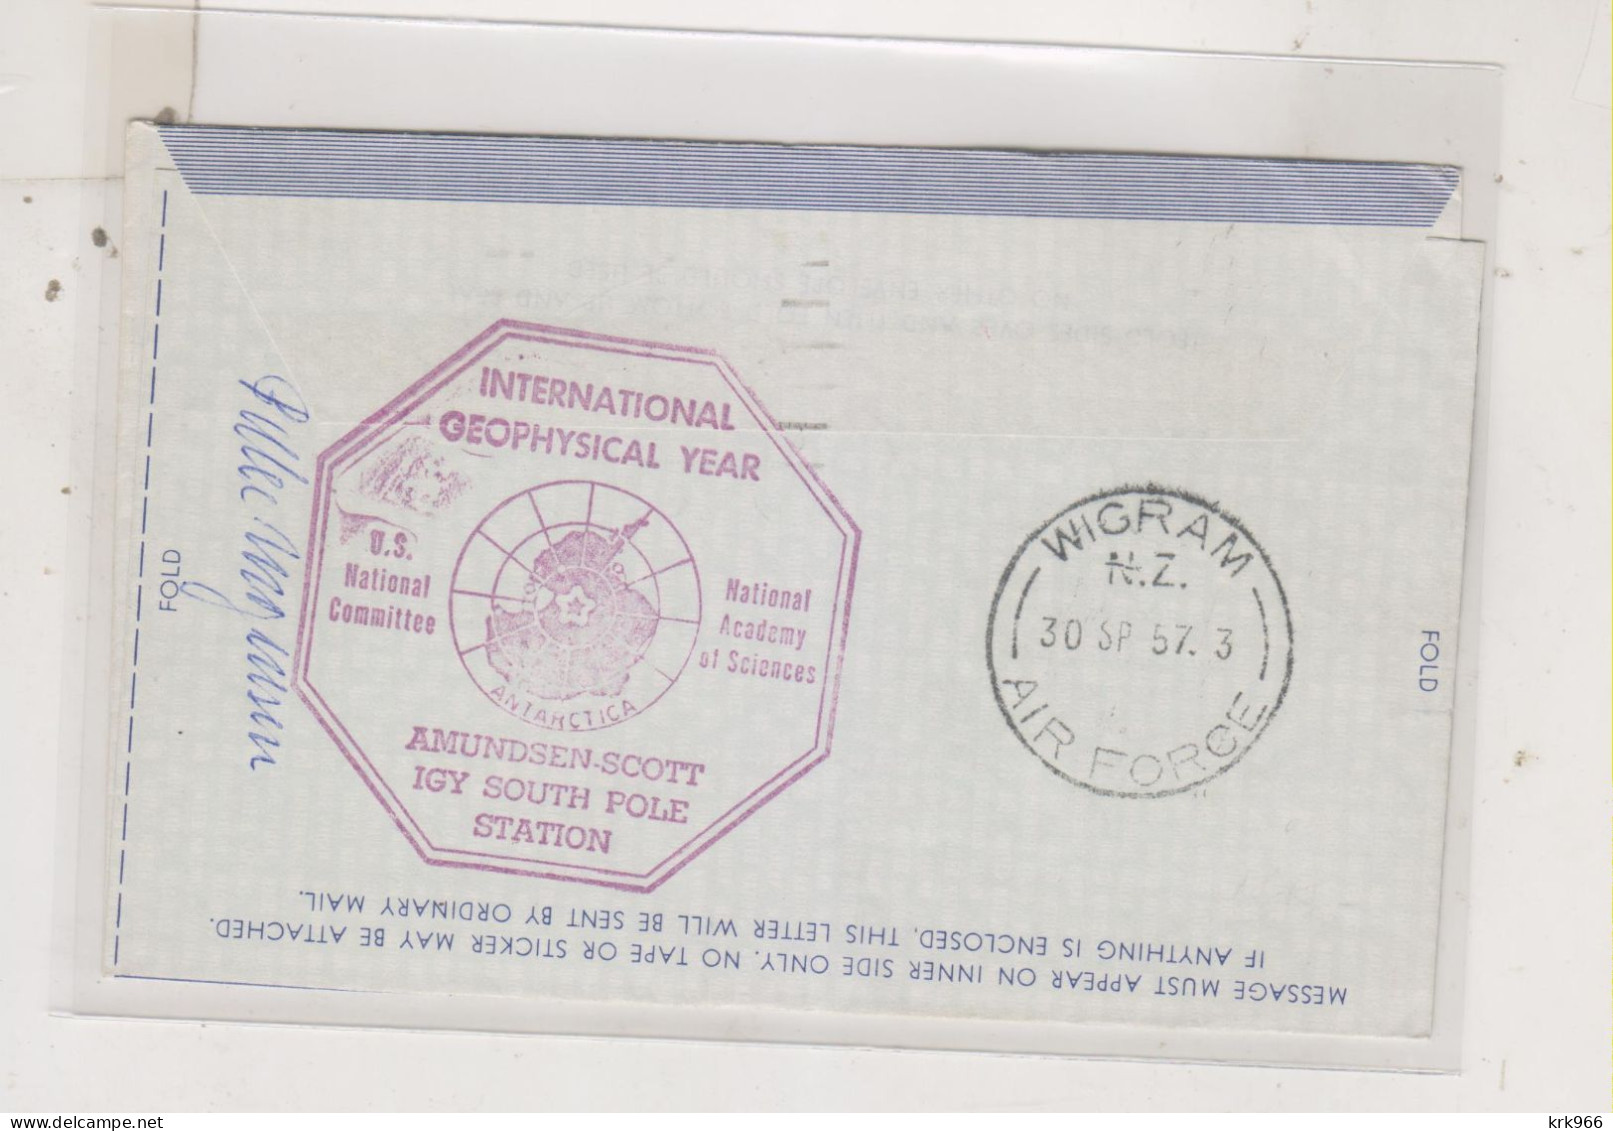 UNITED NATIONS 1957 Nice Airmail Stationery NEW YORK To AMUNDSEN SCOTT IGY SOUTH POLE STATION - Briefe U. Dokumente